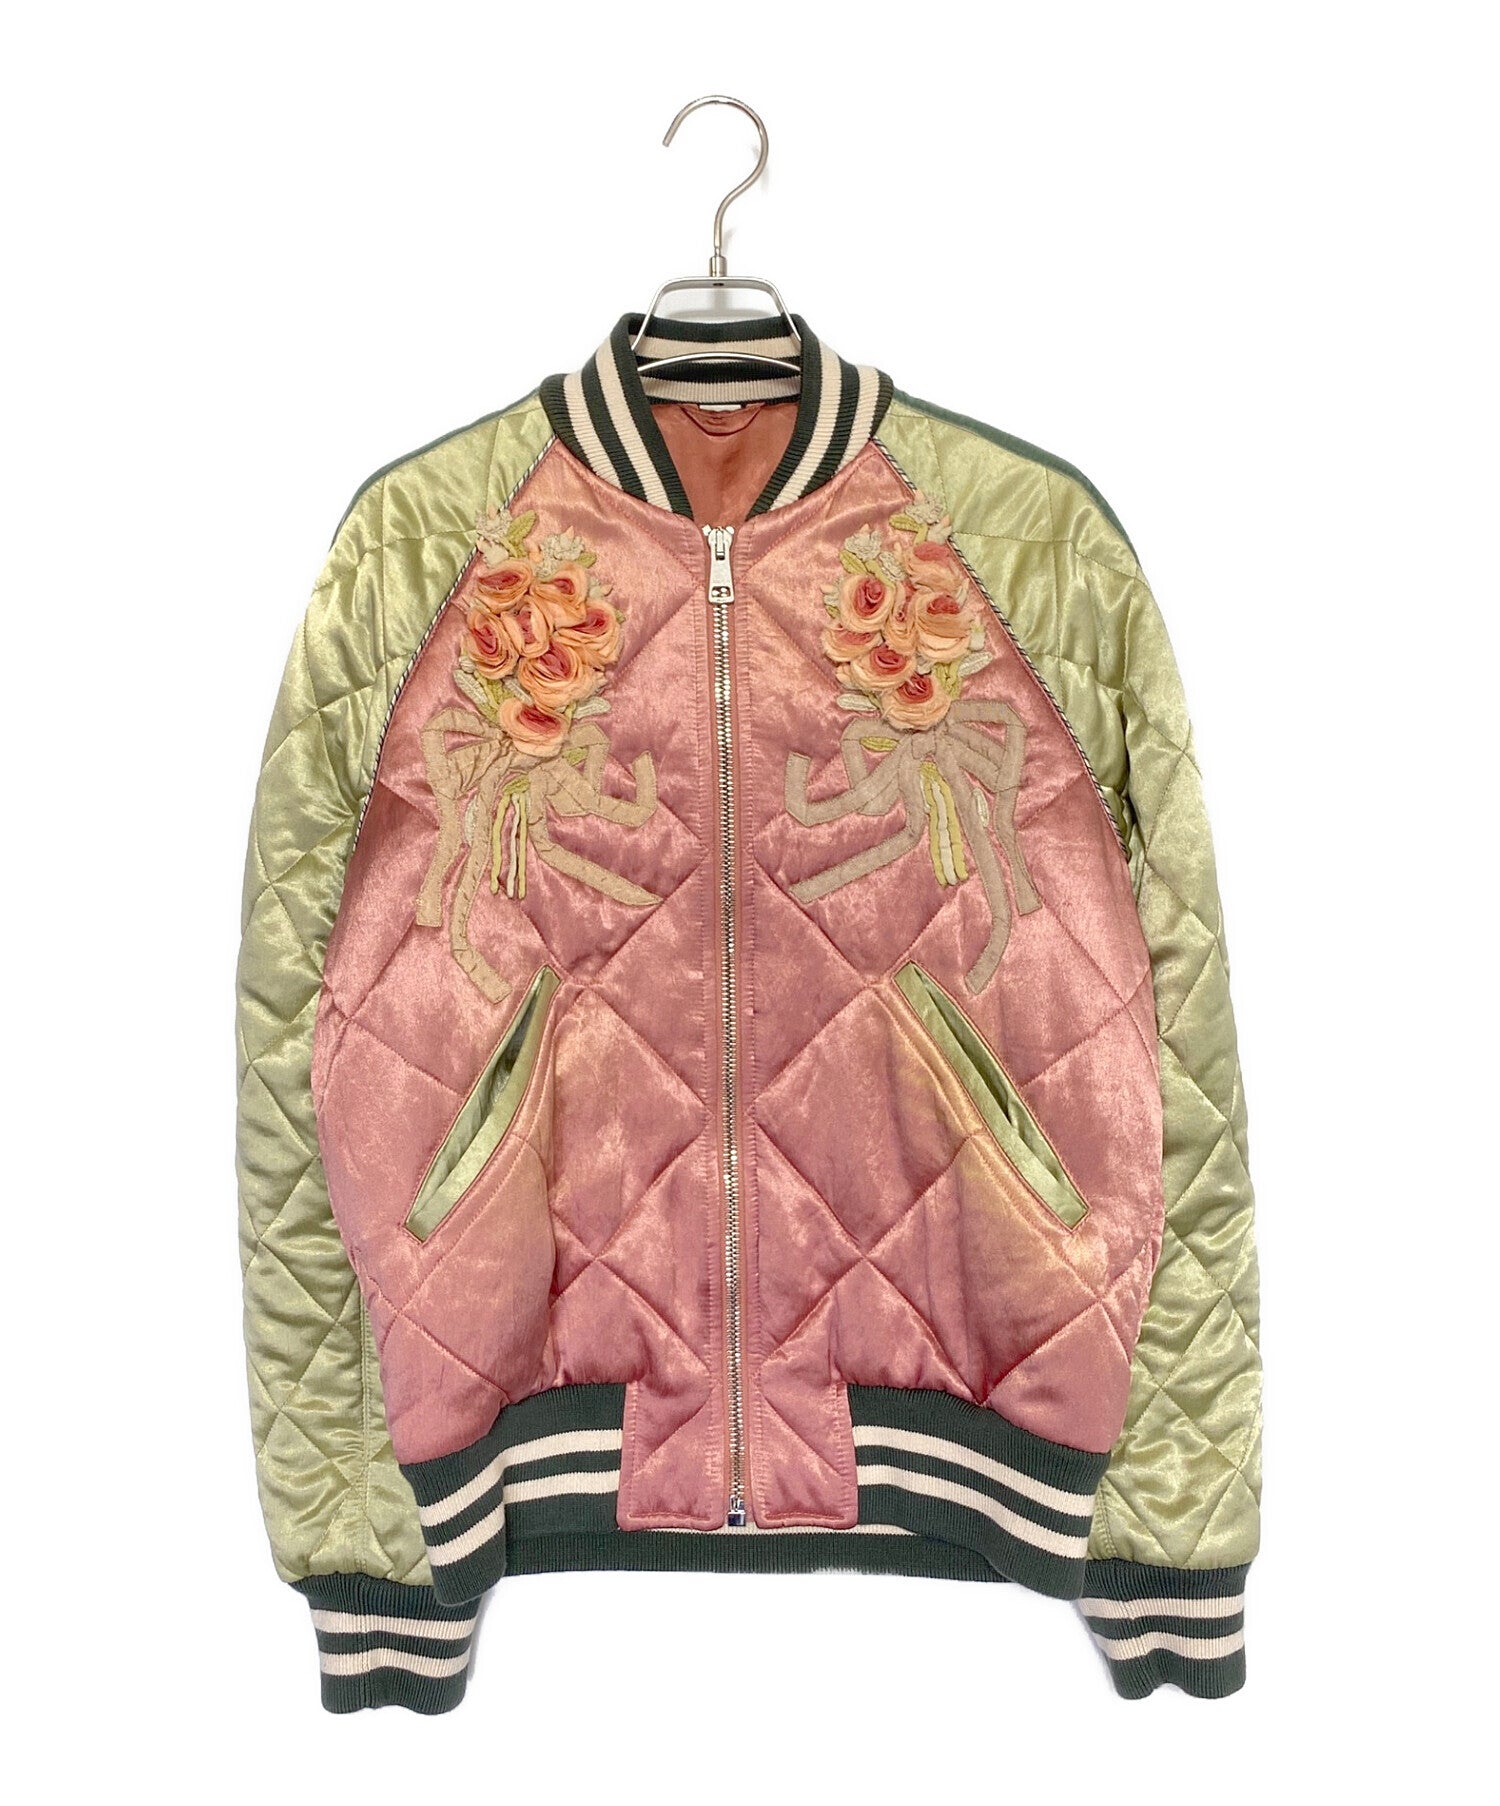 Gucci Shunga Embroidered Bomber Jacket